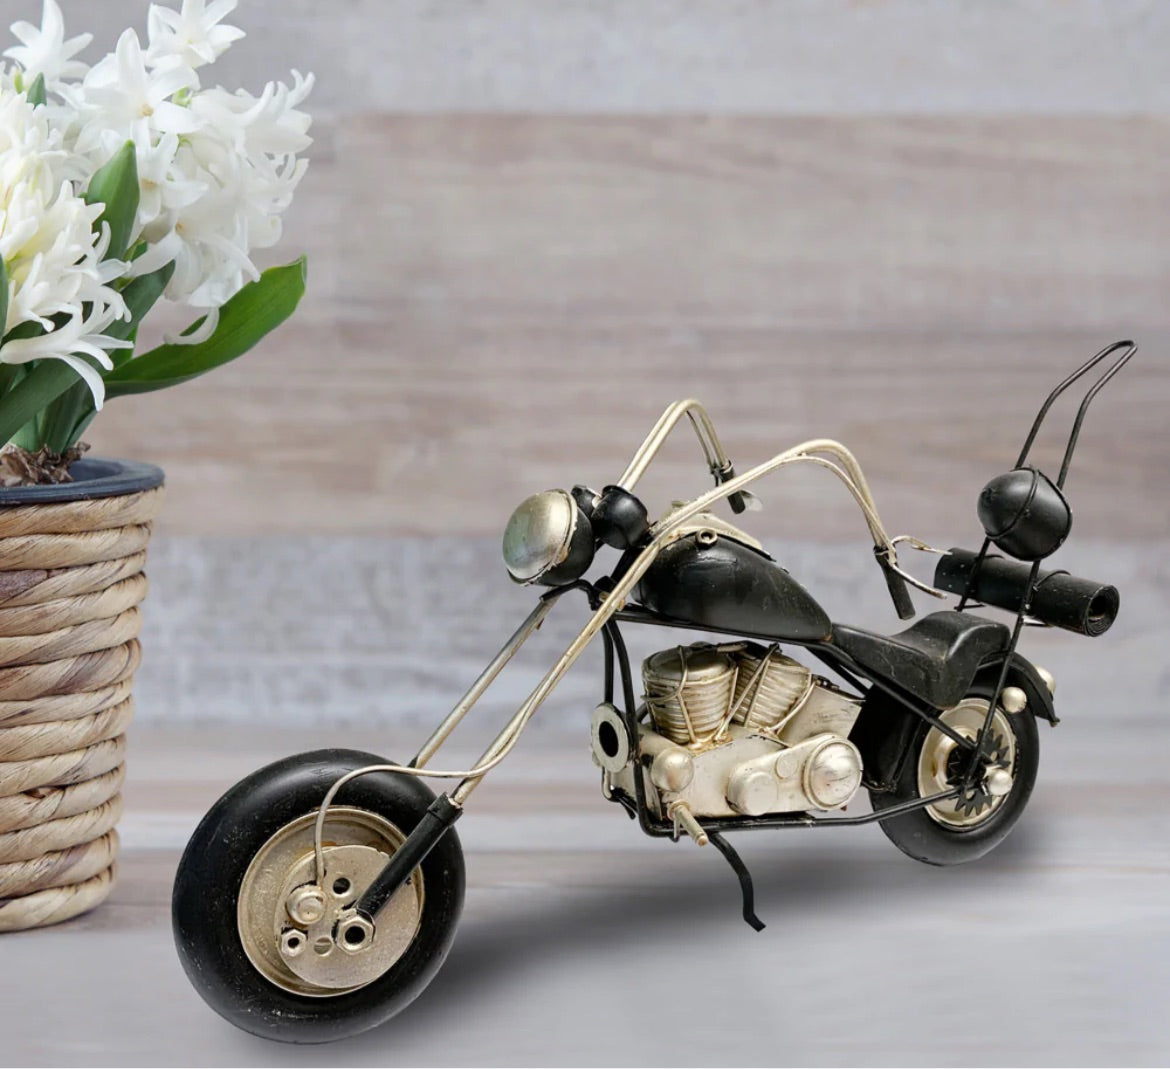 metal chopper motorcycle model for bike lovers